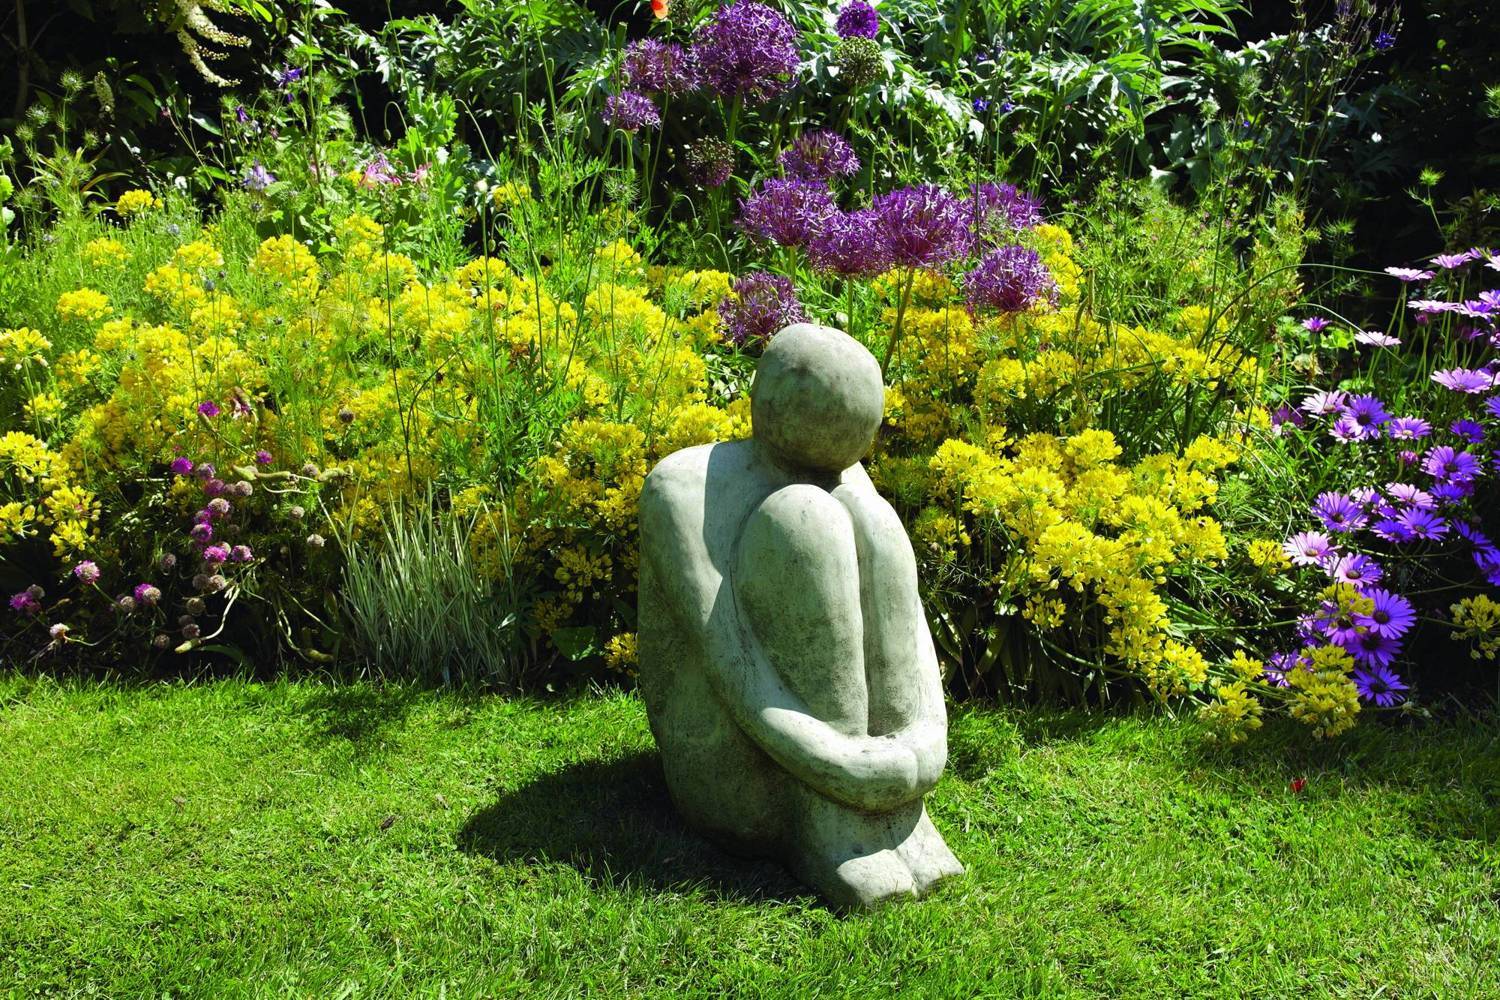 Large Henry Contemporary Art Garden Statue